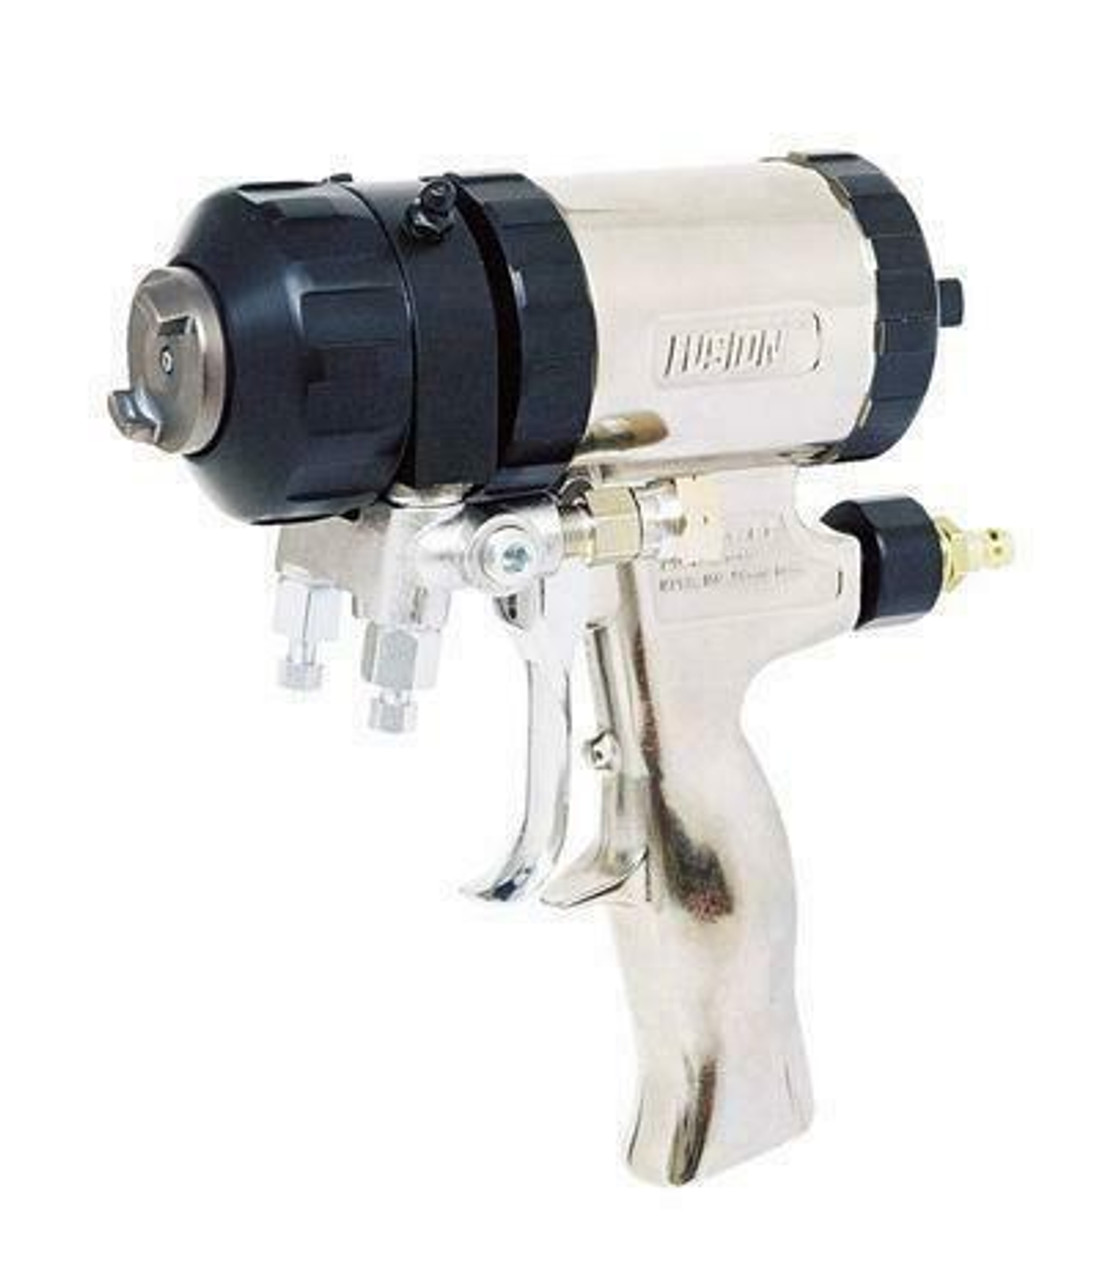 Spray Foam Gun, Gun for Spraying Foam, Foam Gun Sprayer